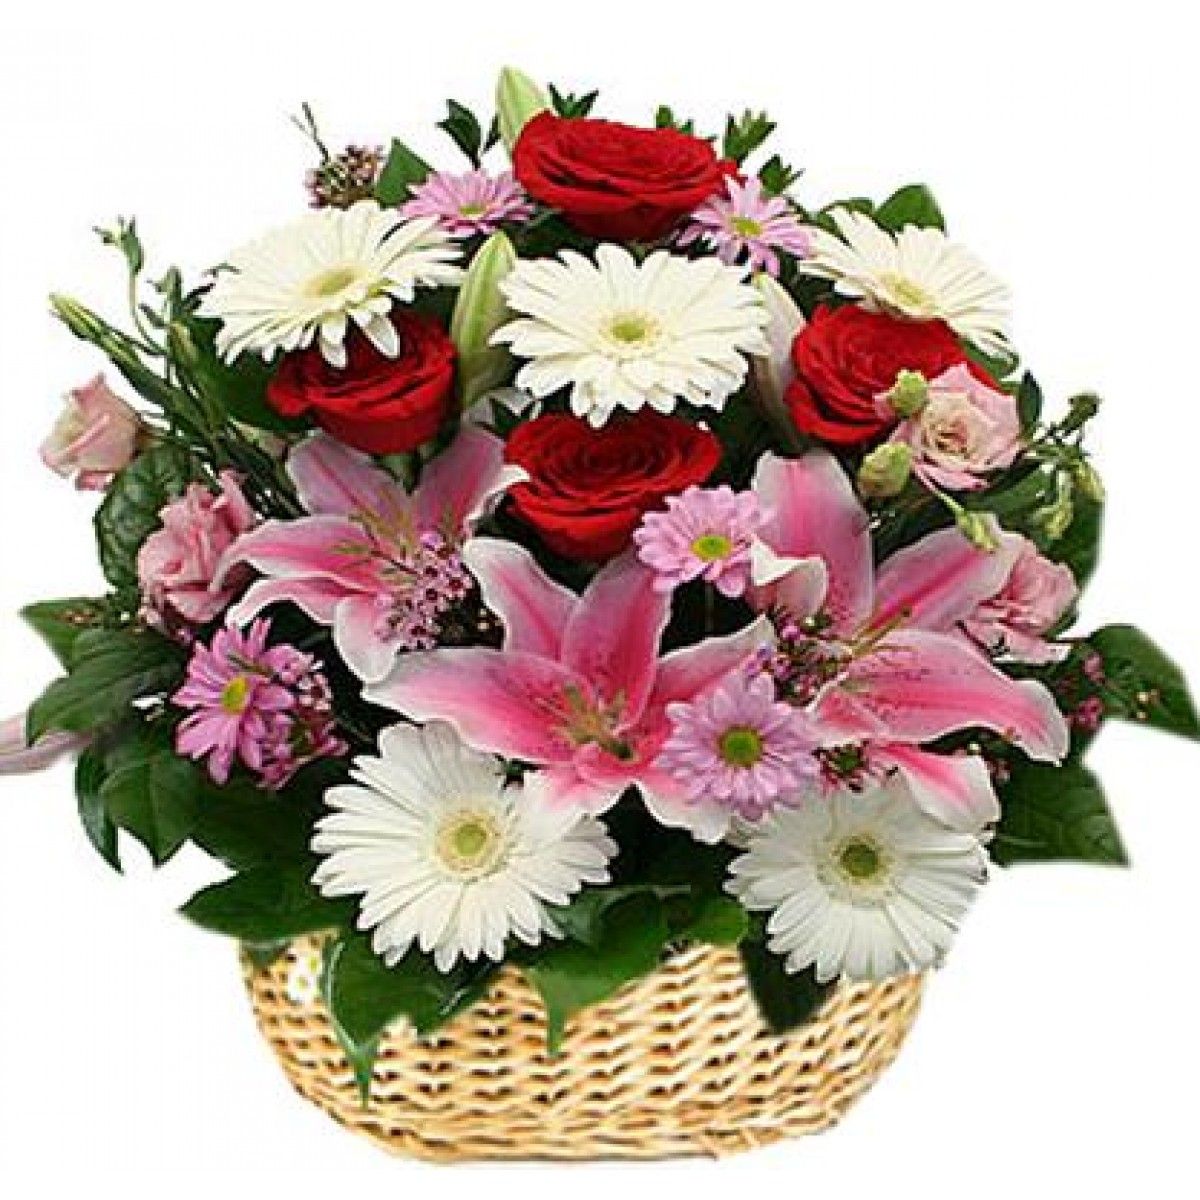 Send Lilies Flower Arrangements Online in Lowest Price- Flaberry